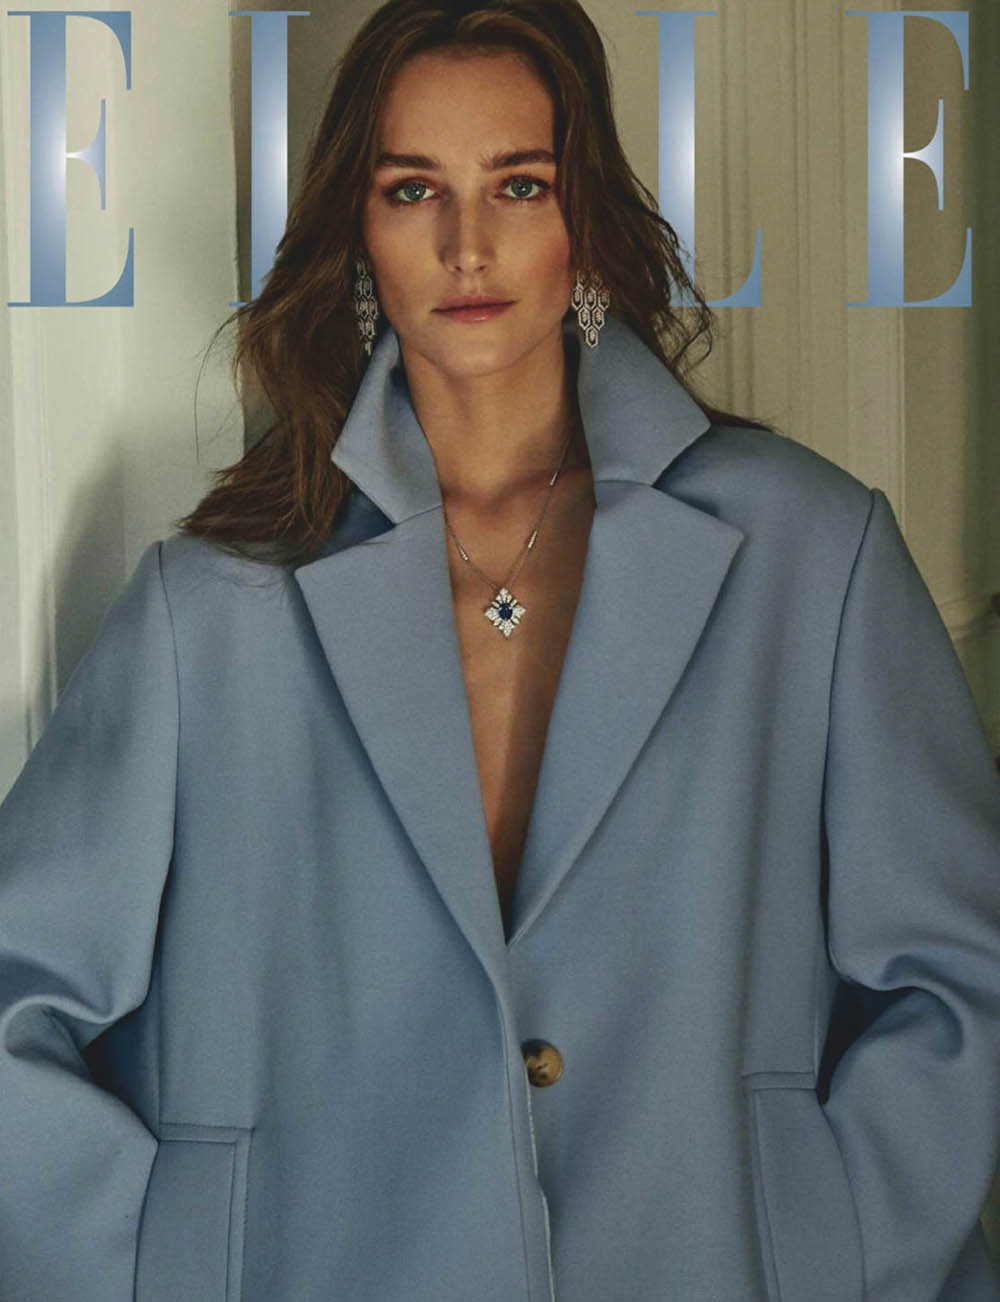 Joséphine Le Tutour covers Elle Spain February 2020 by Rafa Gallar